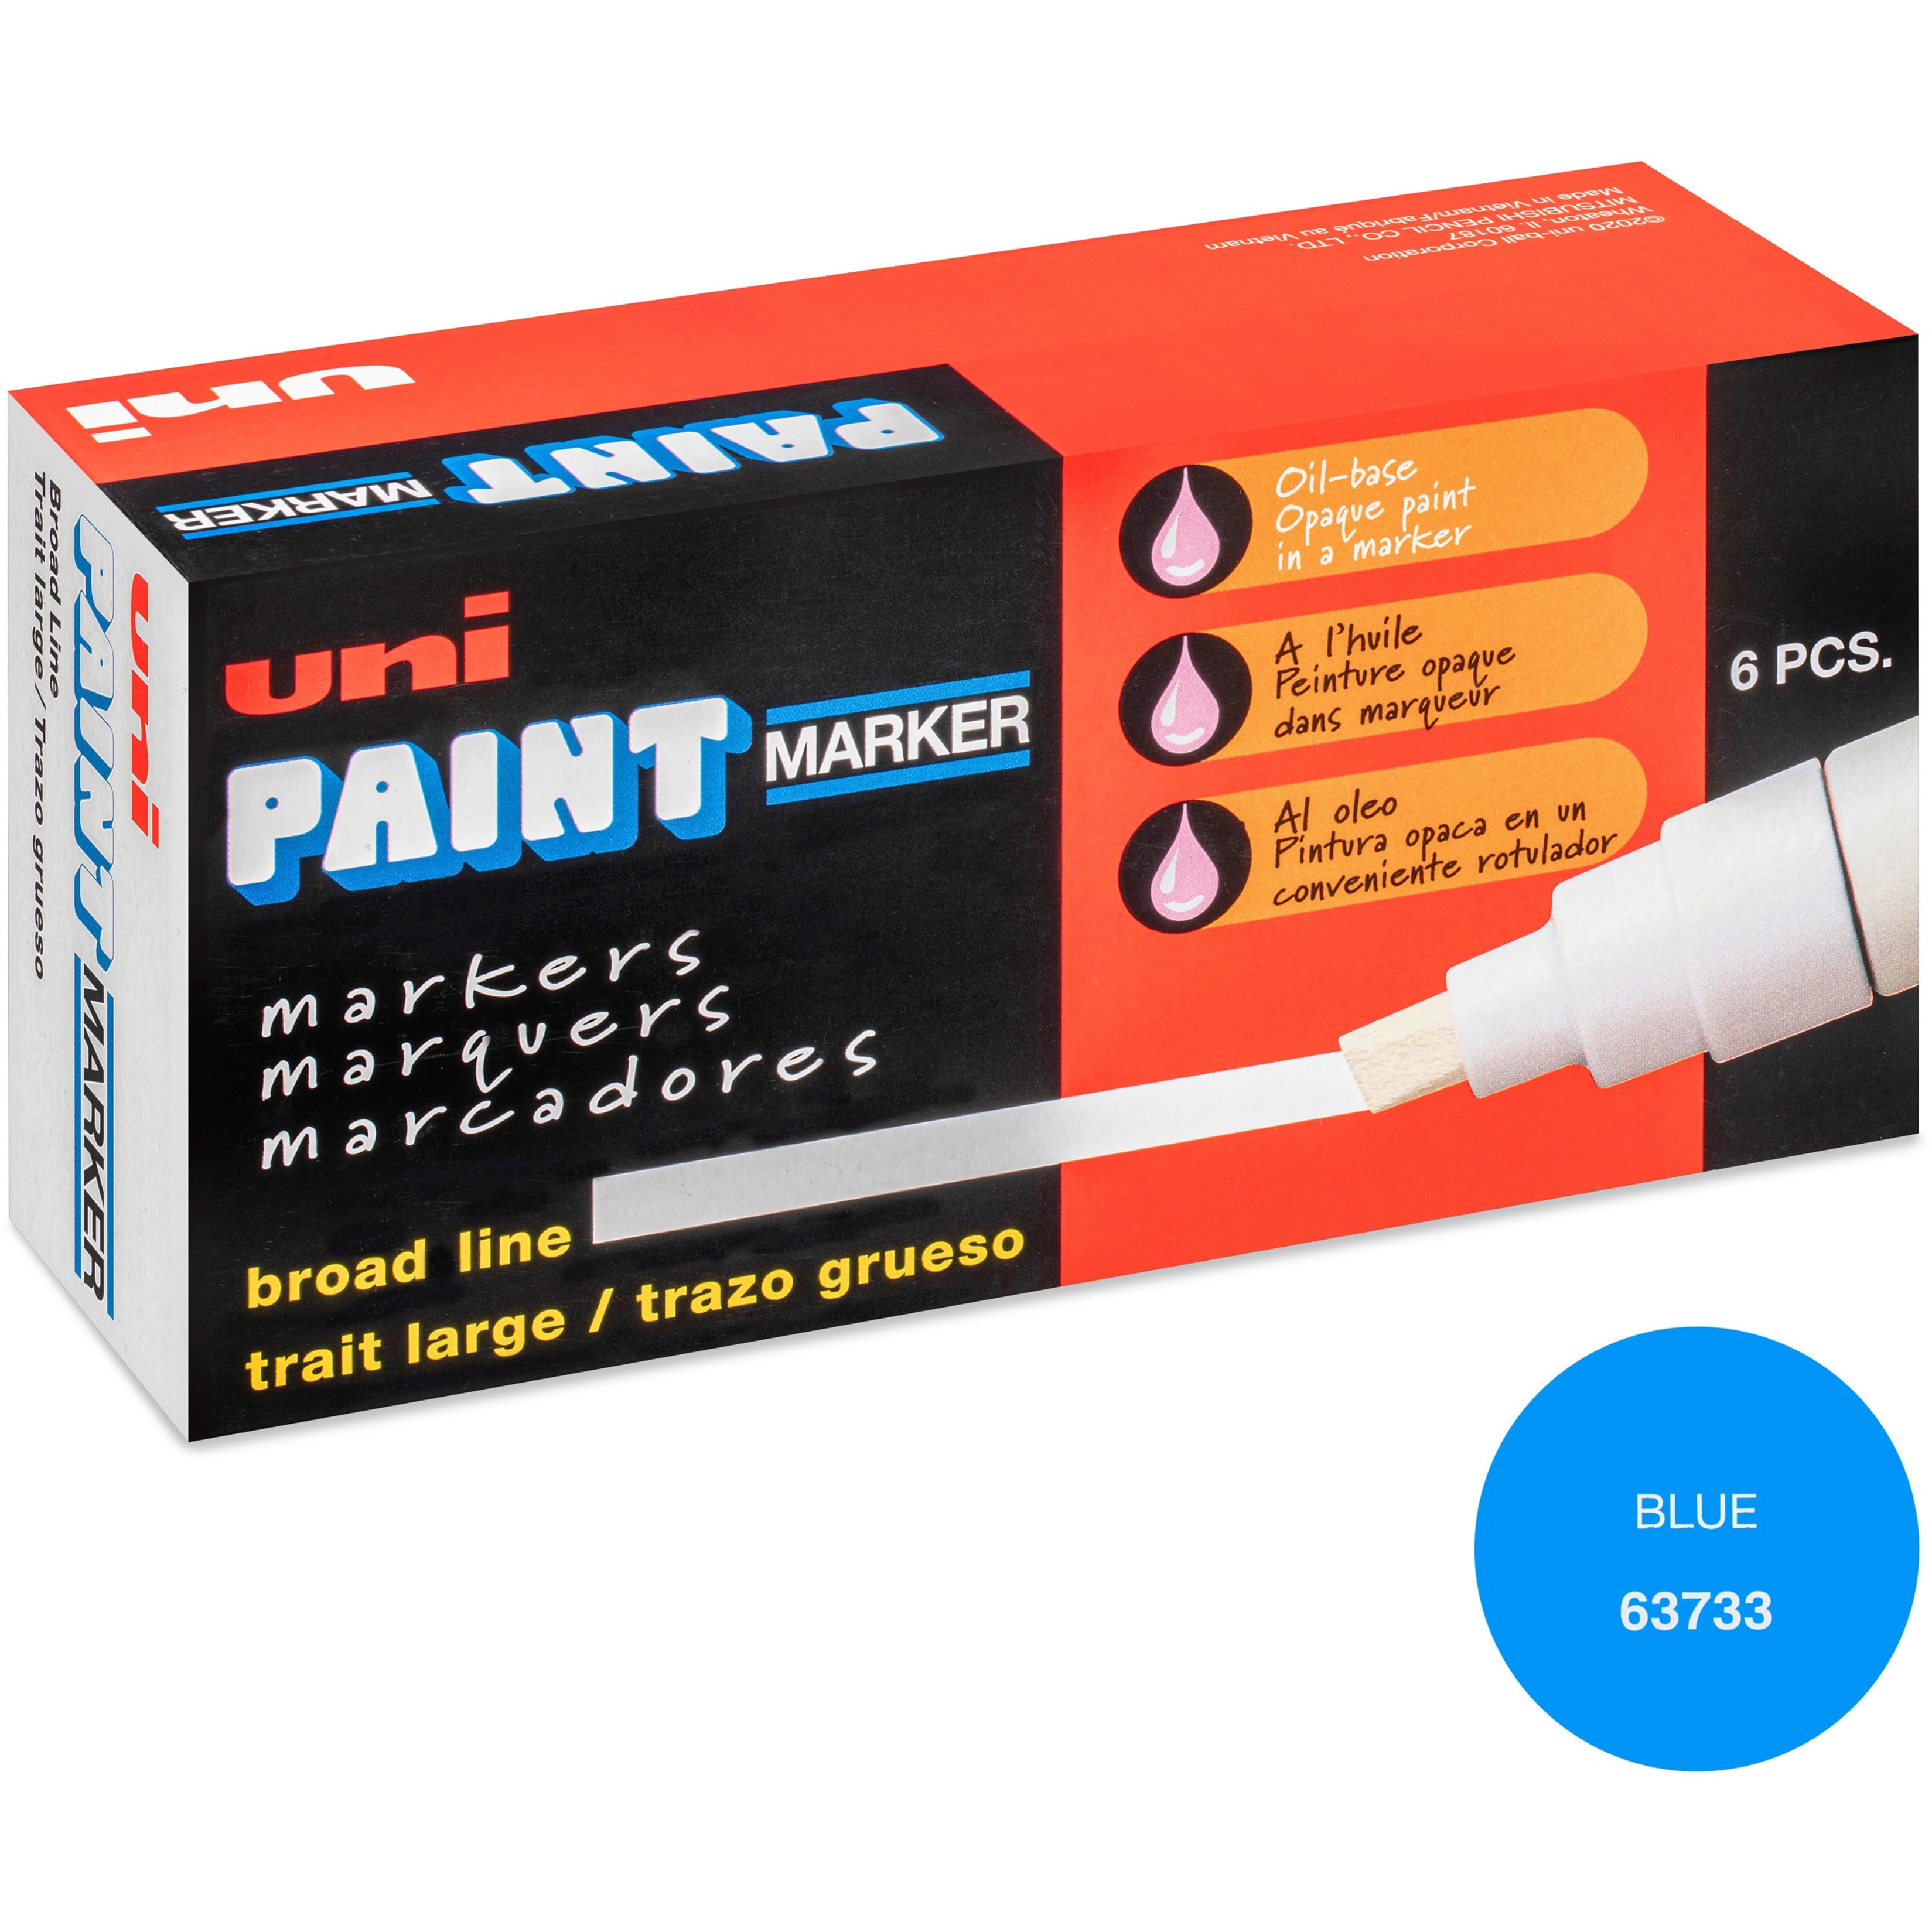 uni® uni-Paint PX-20 Oil-Based Paint Marker - Medium UBC63605DZ